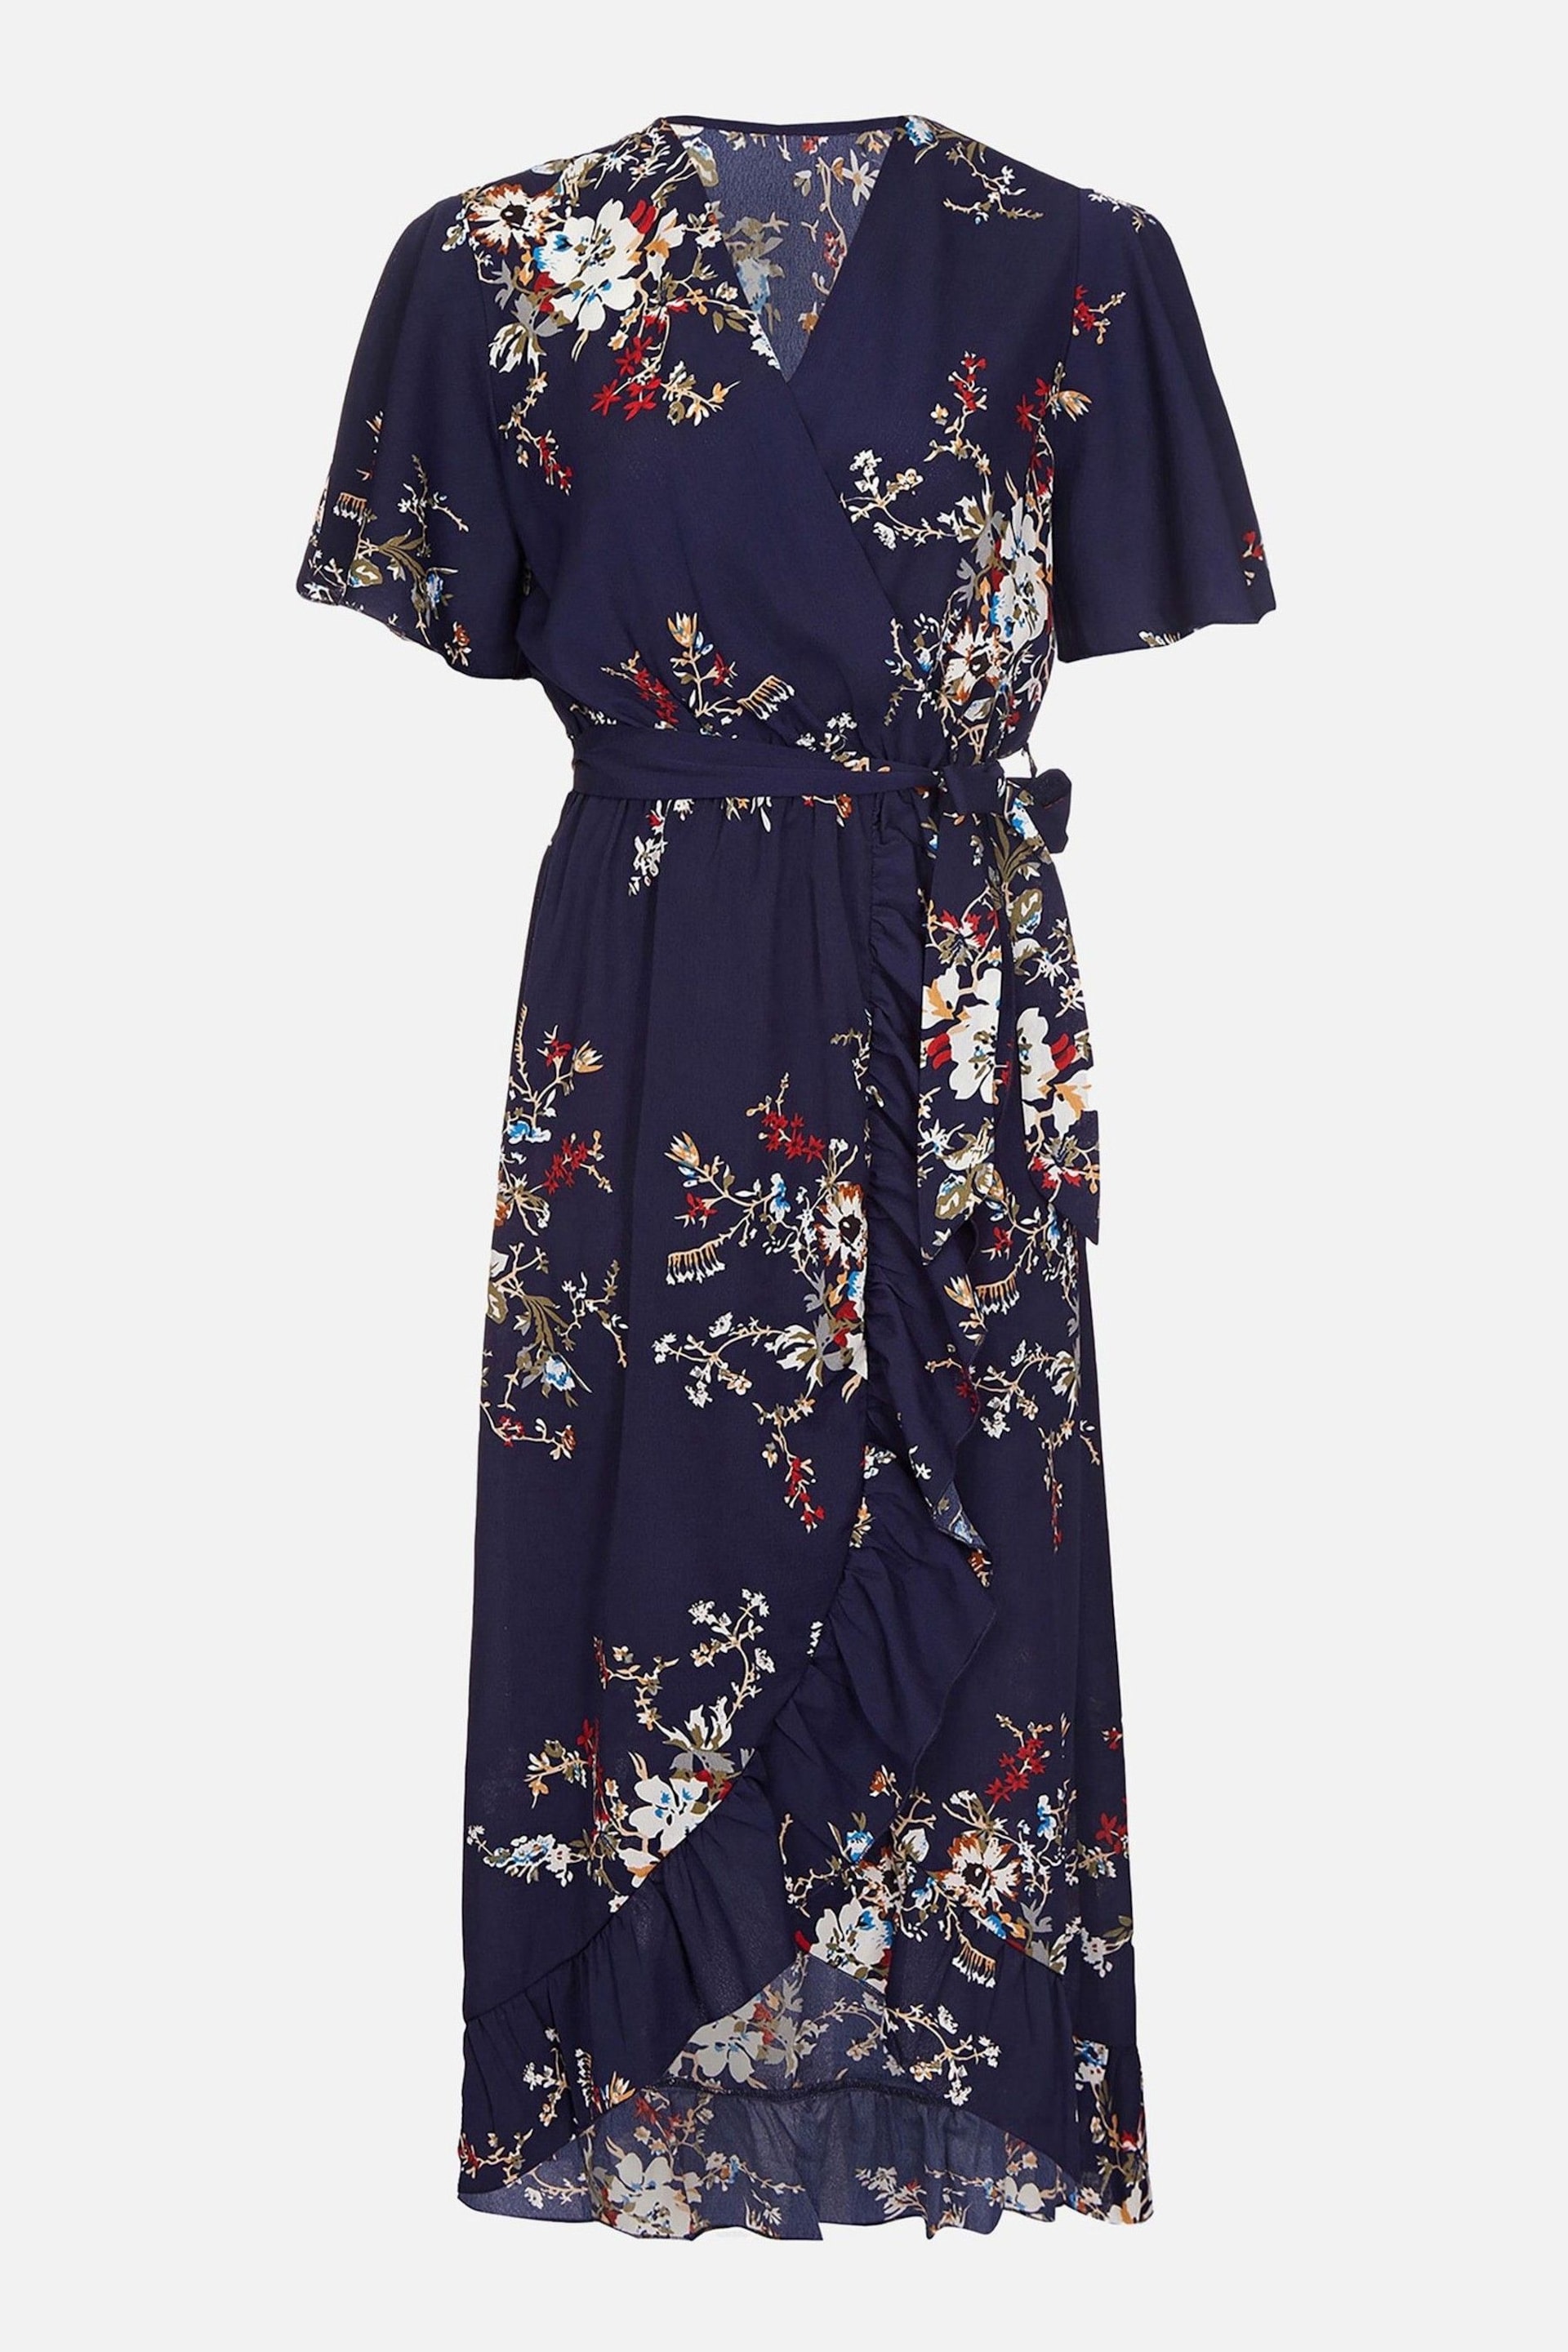 Mela Blue Floral Short Sleeve Maxi Dress - Image 4 of 4